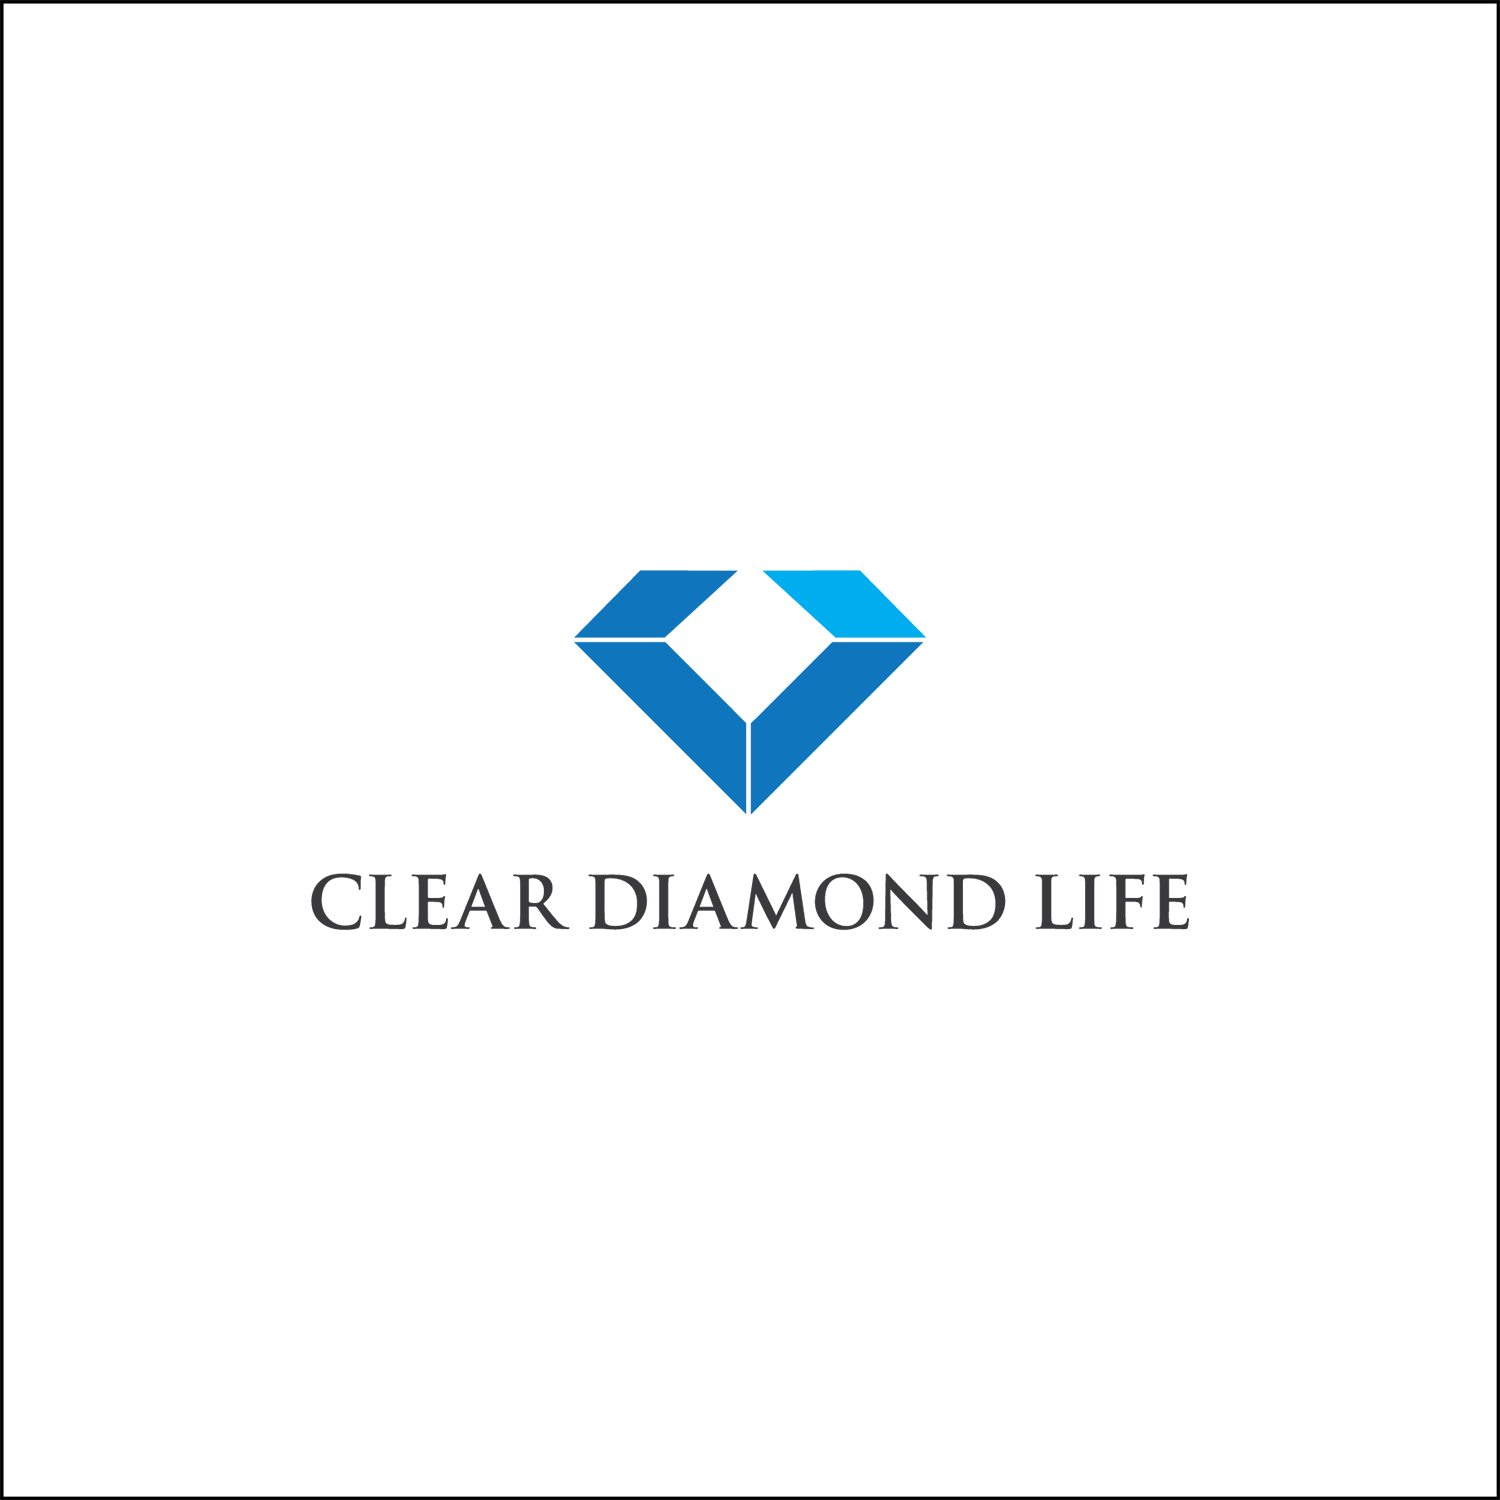 Diamond Life Logo - Serious, Modern, Financial Planning Logo Design for Clear Diamond ...